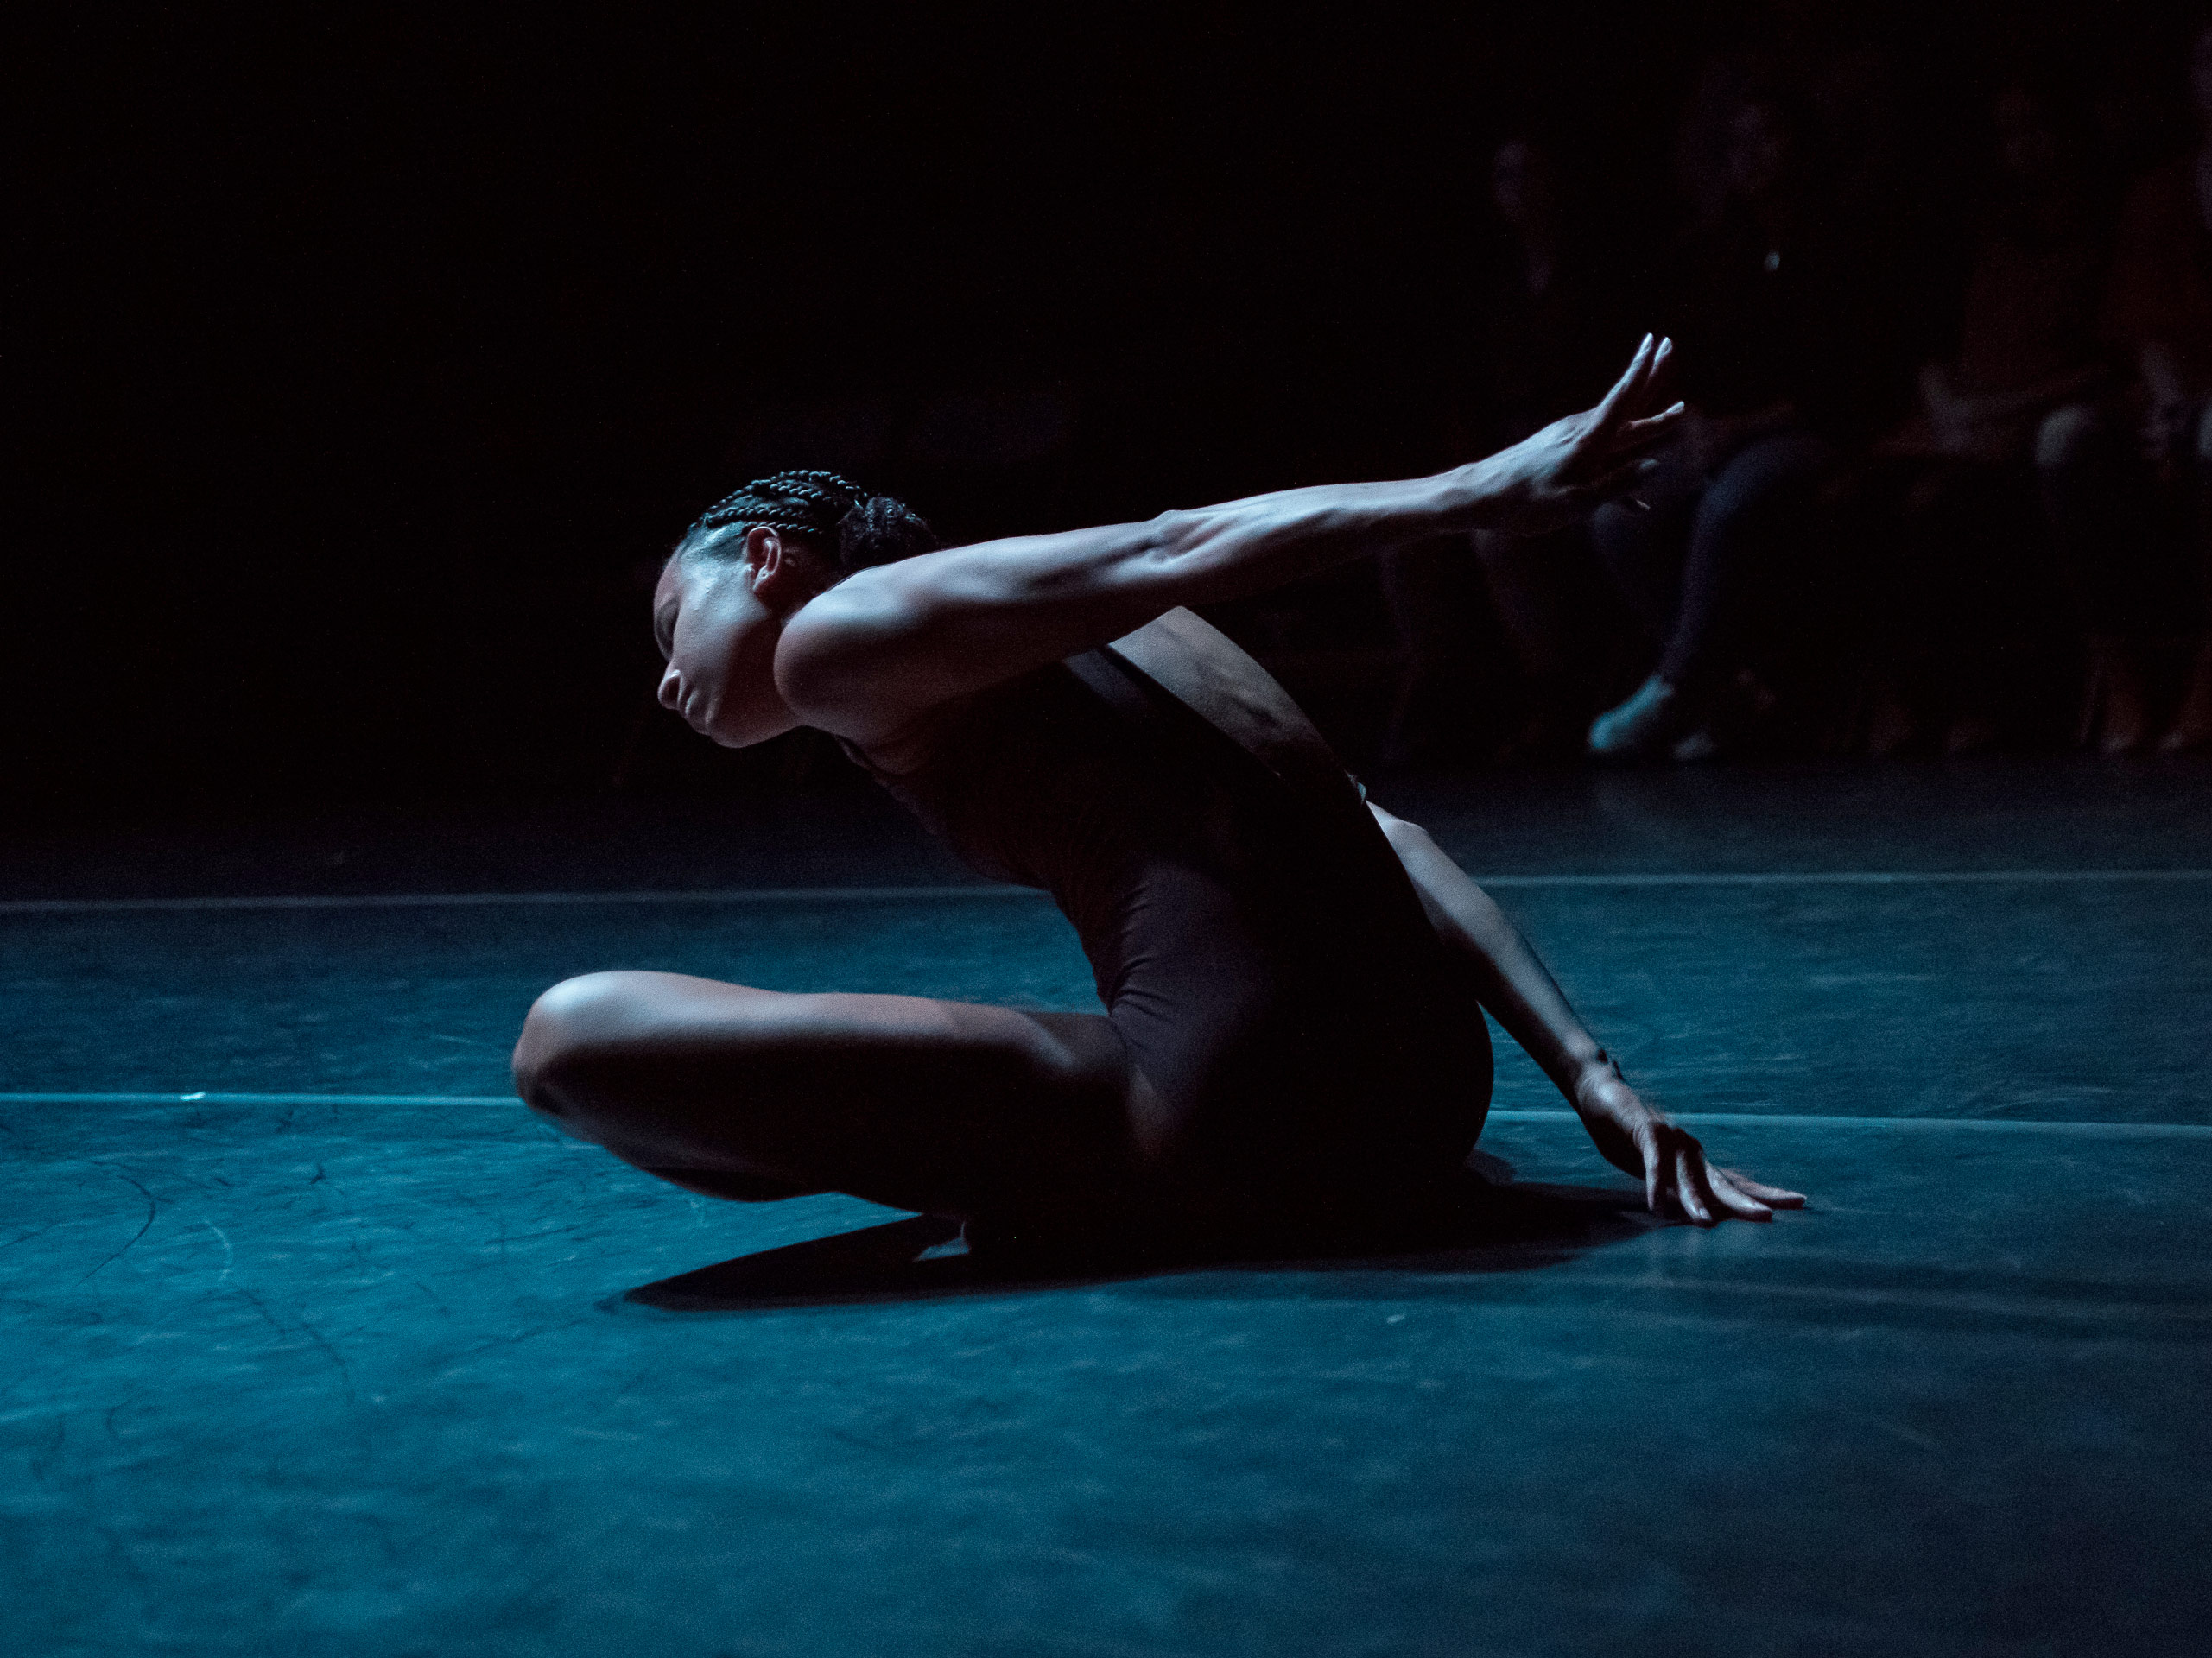 push/FOLD dancer Ashley Morton performing at Union PDX - Festival:19 at the Hampton Opera Center in Portland, Oregon | Photographer: Jingzi Zhao